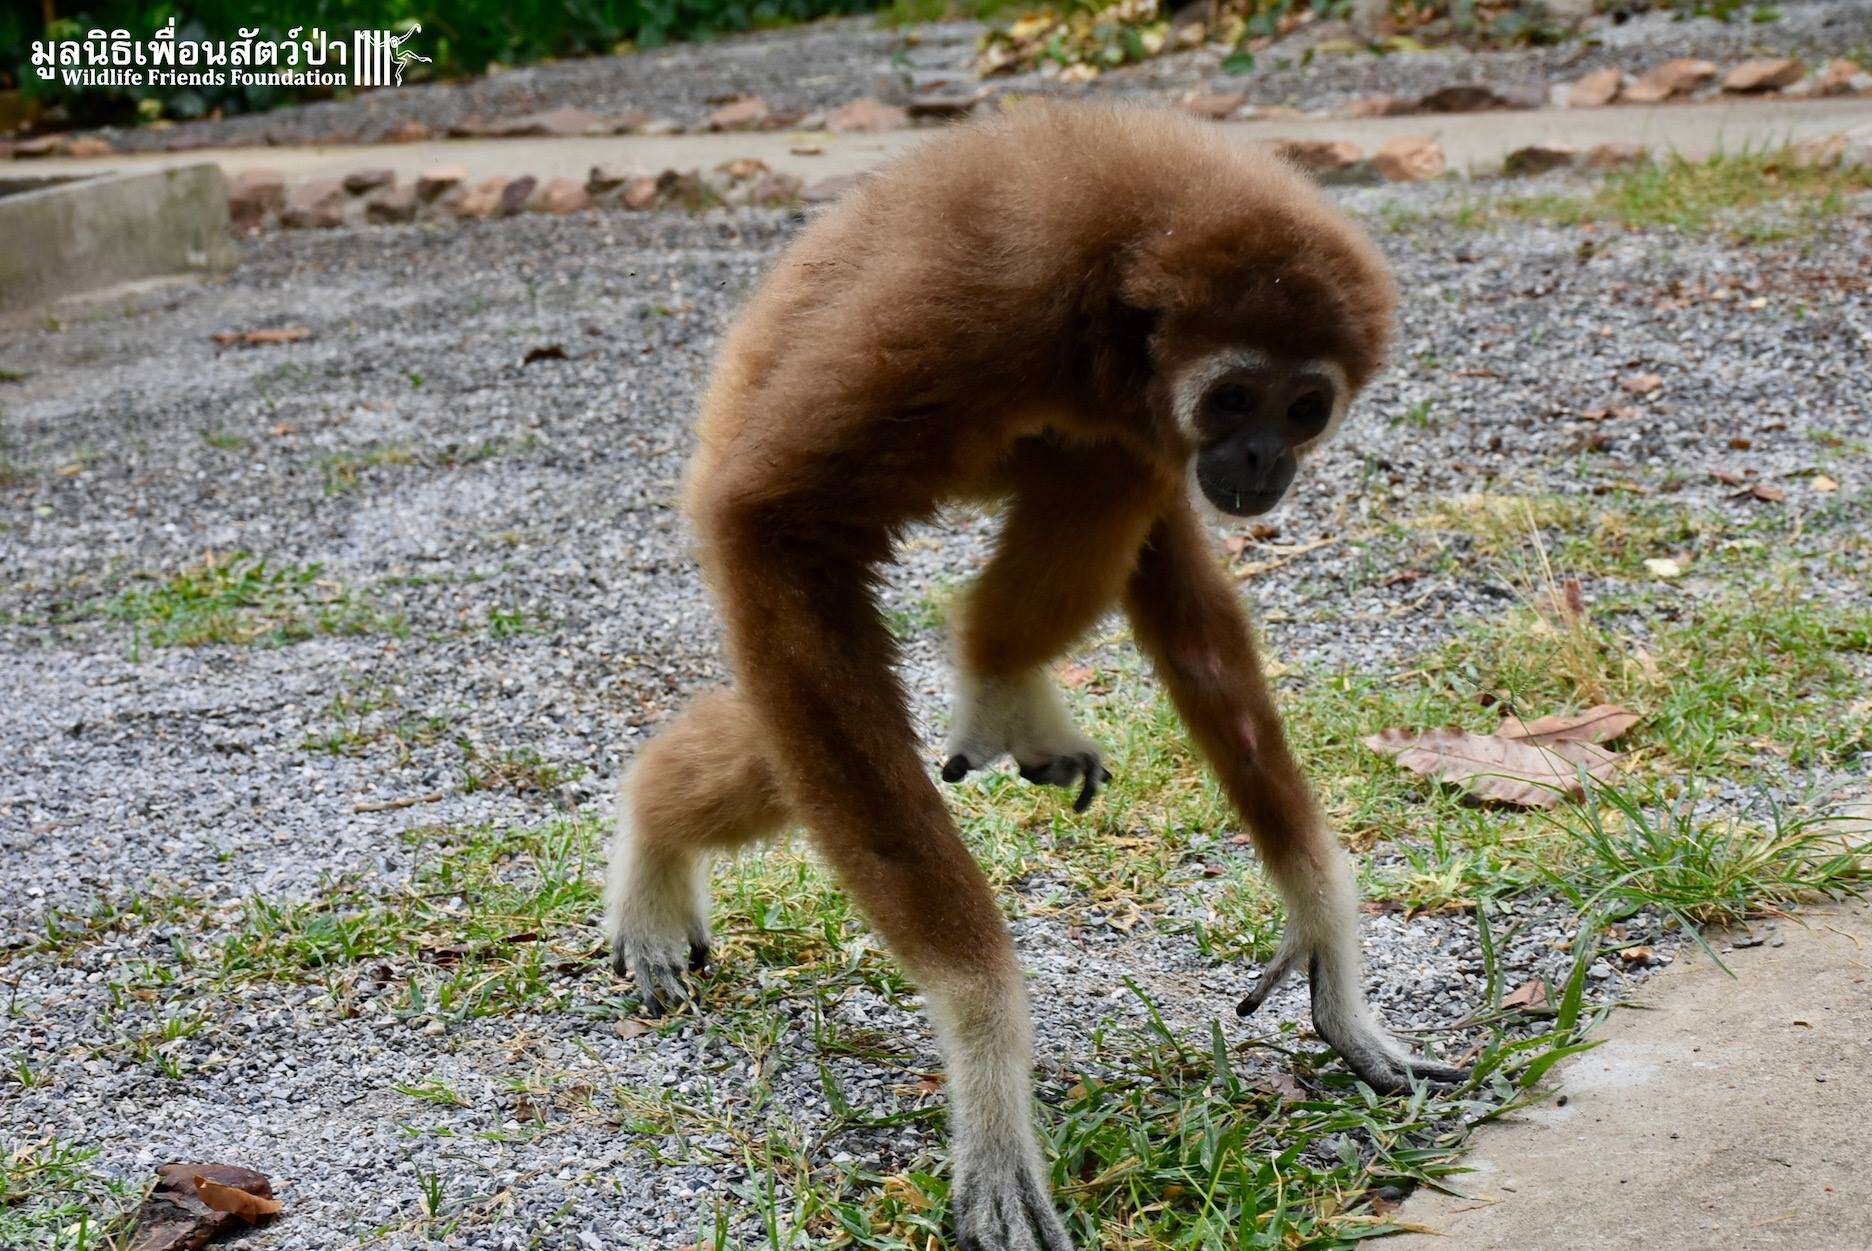 Gibbon rescued from captivity explores sanctuary